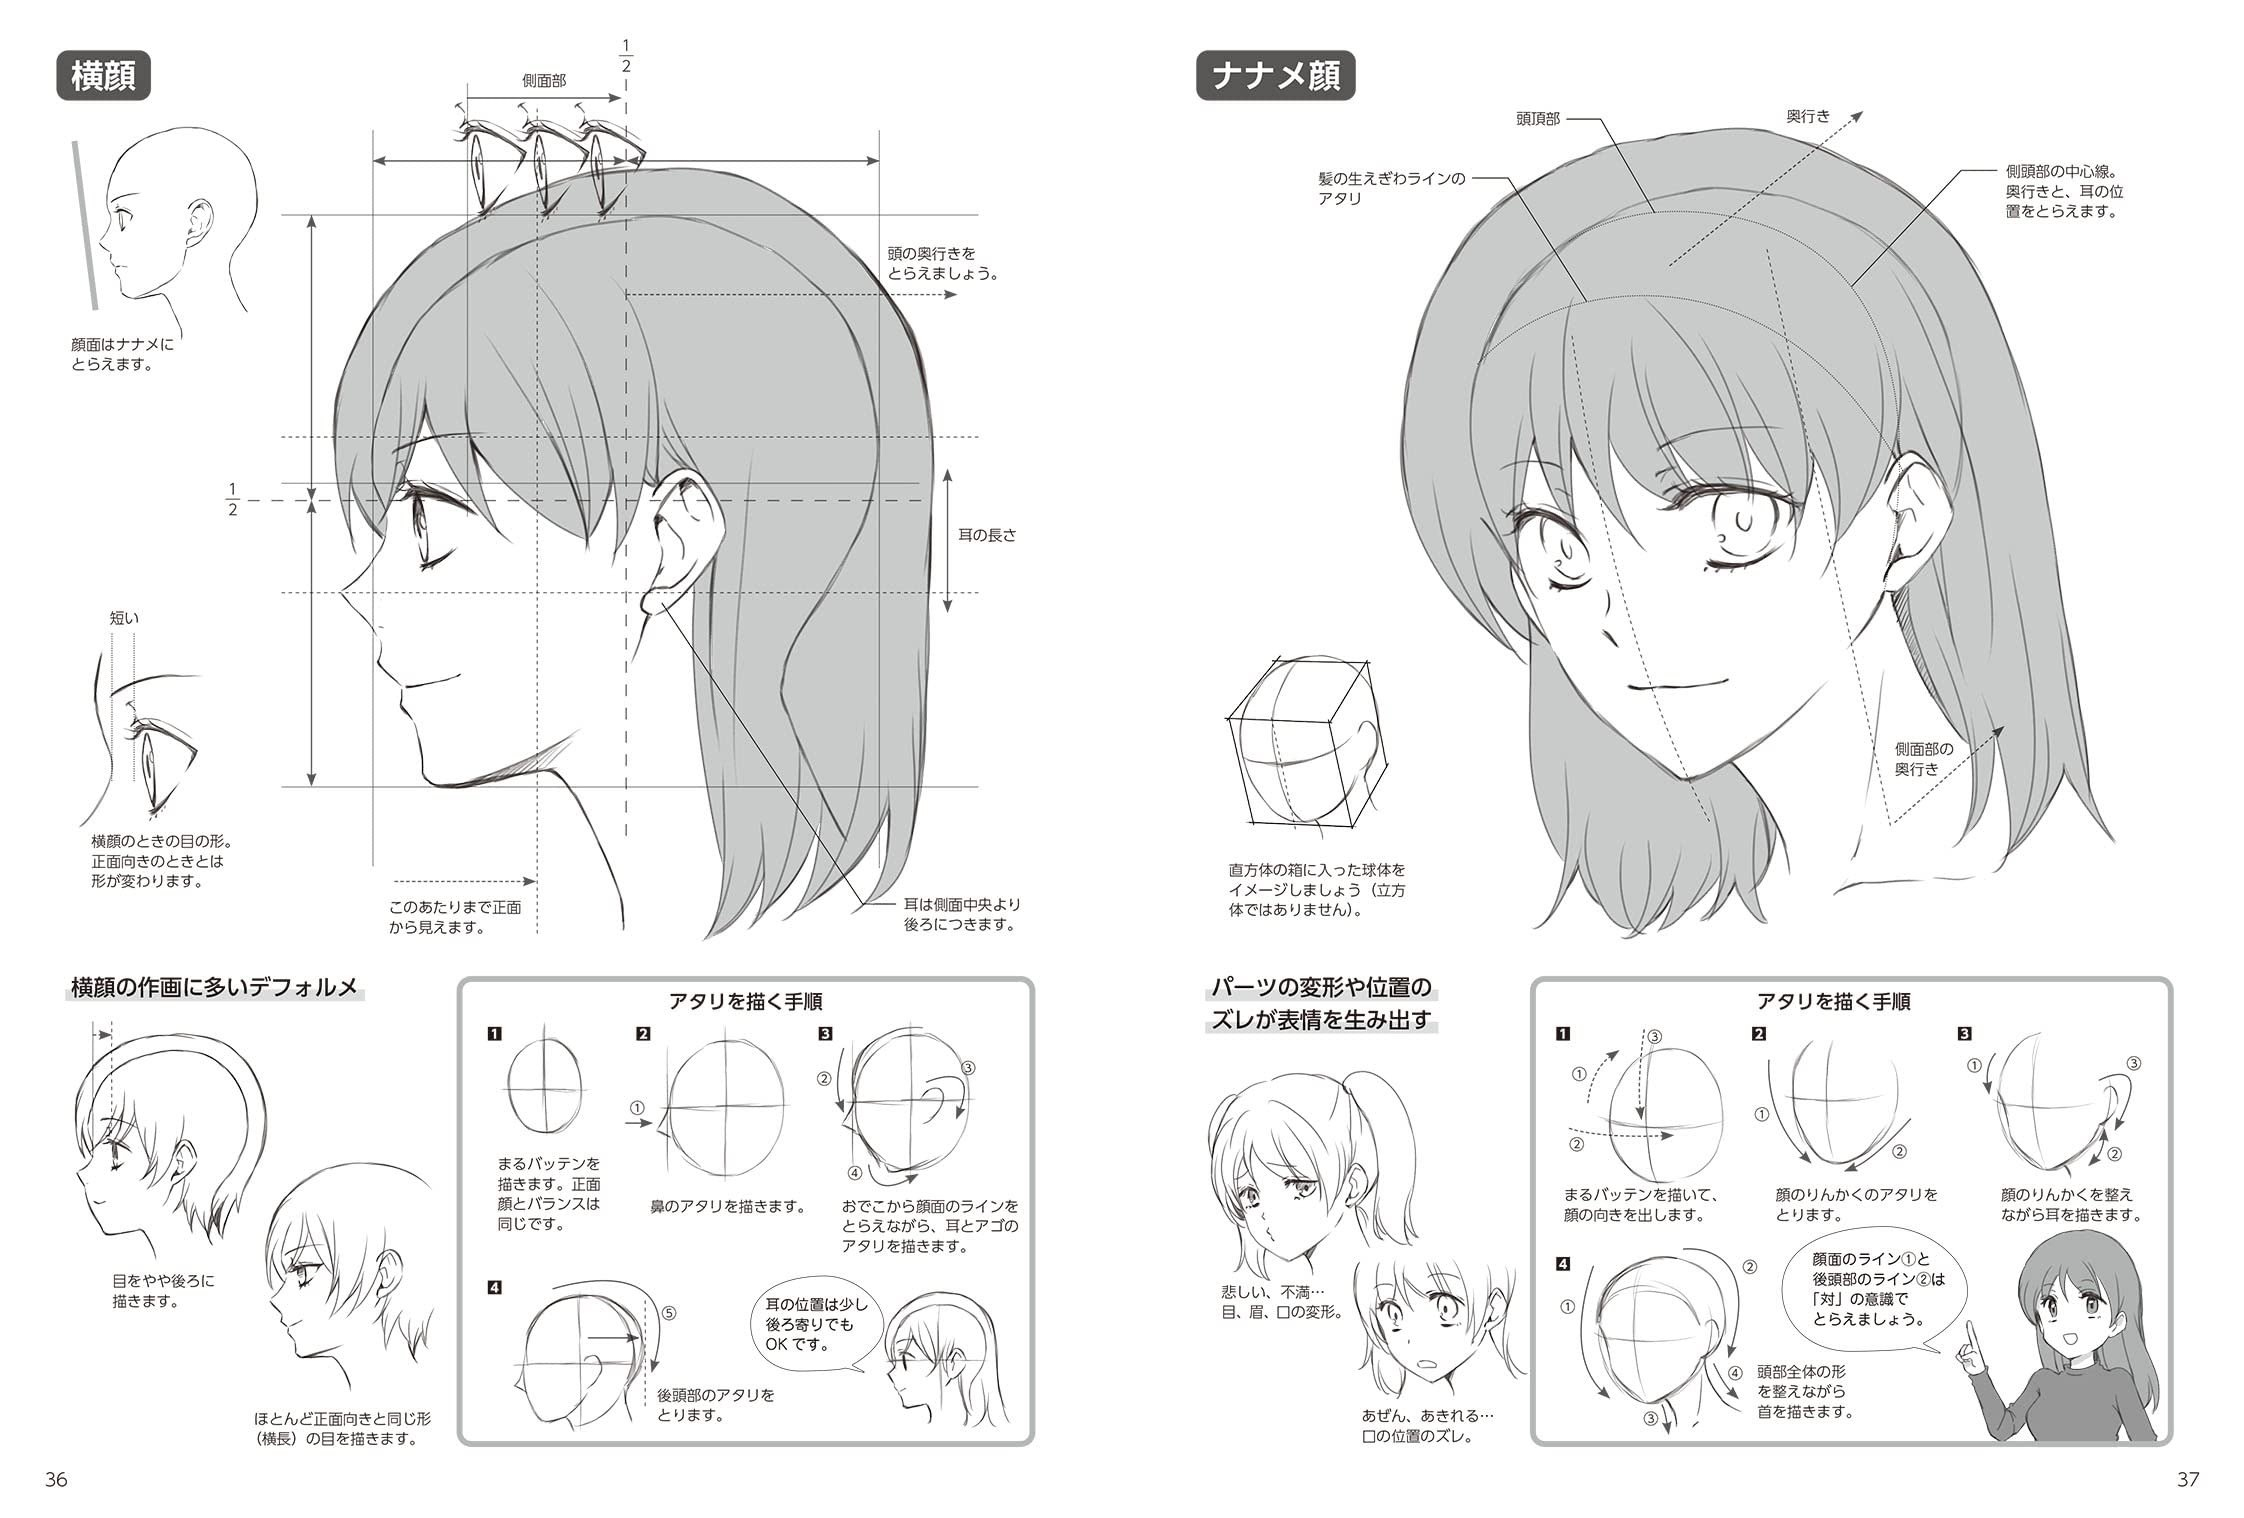 Manga X O-TAKU Technique: How to Draw a Manga Character Face